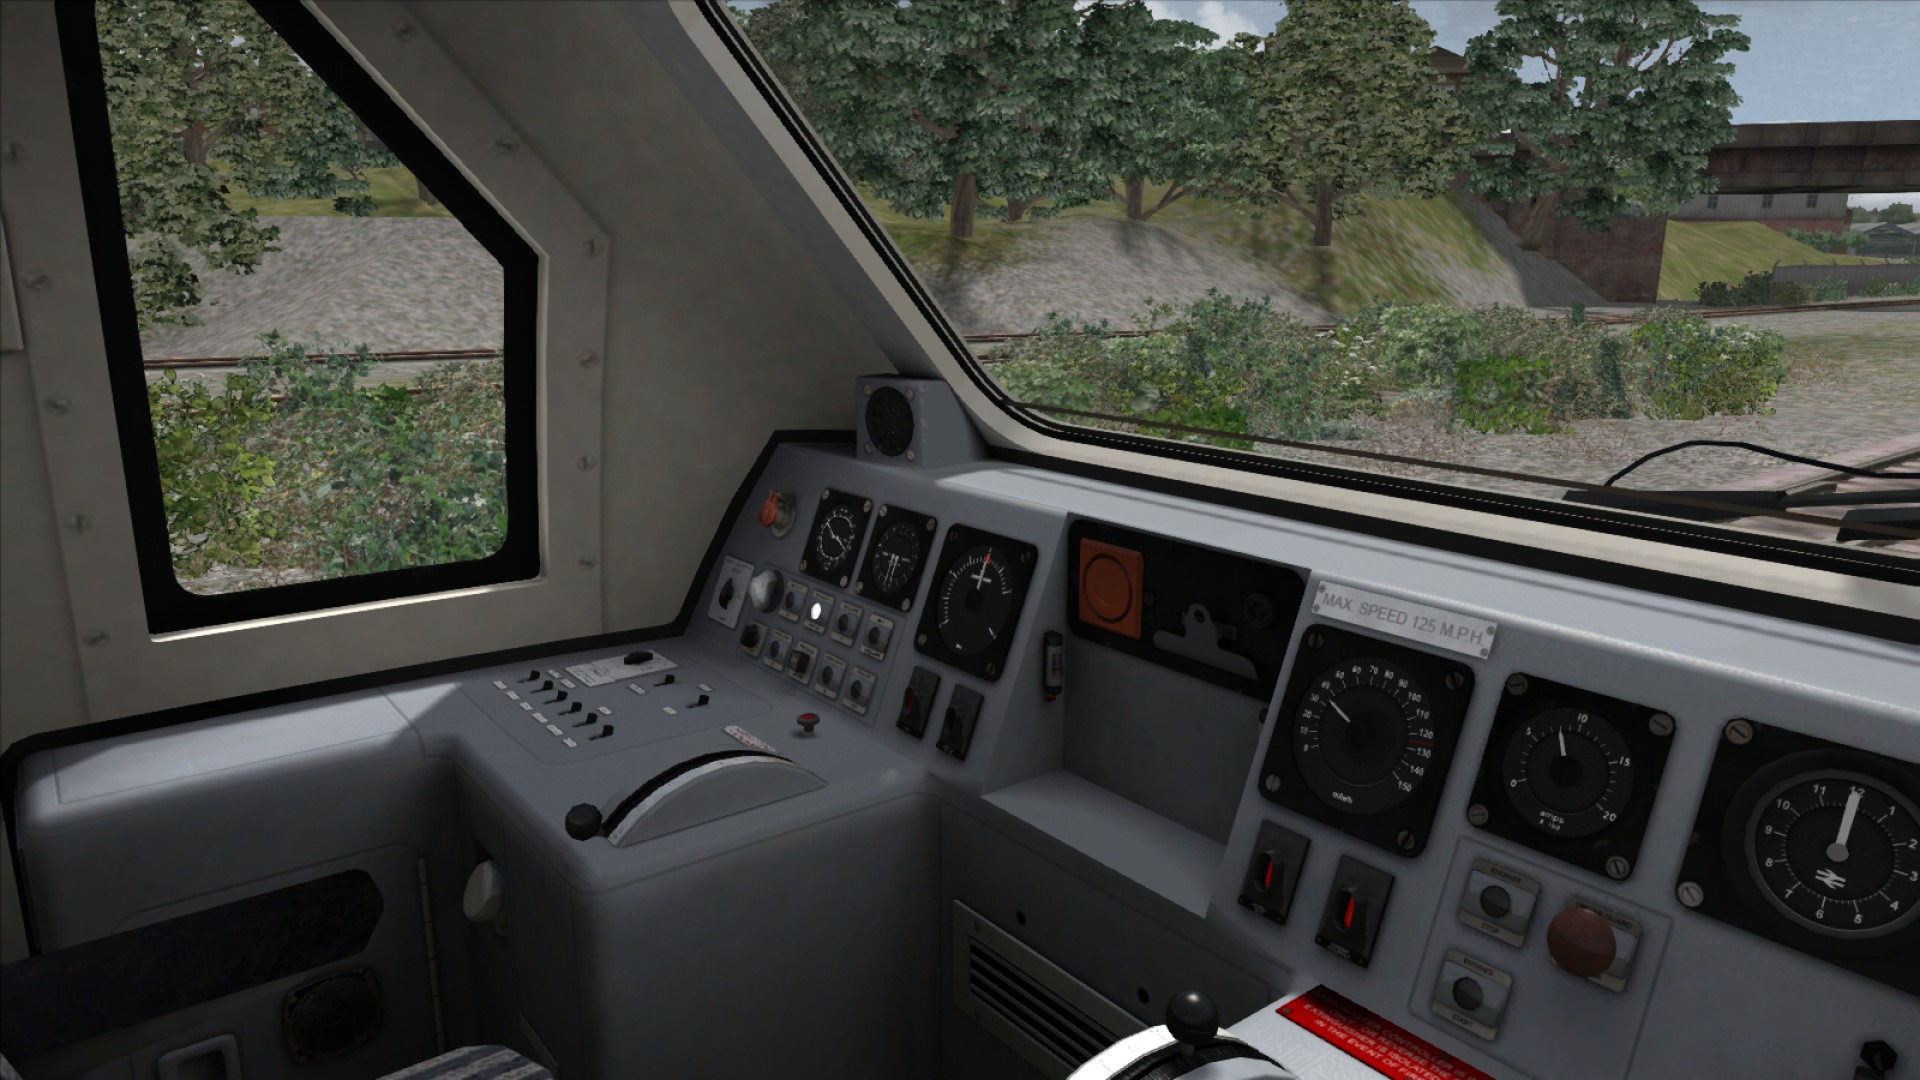 Train Simulator: East Coast Main Line Route Add-On screenshot